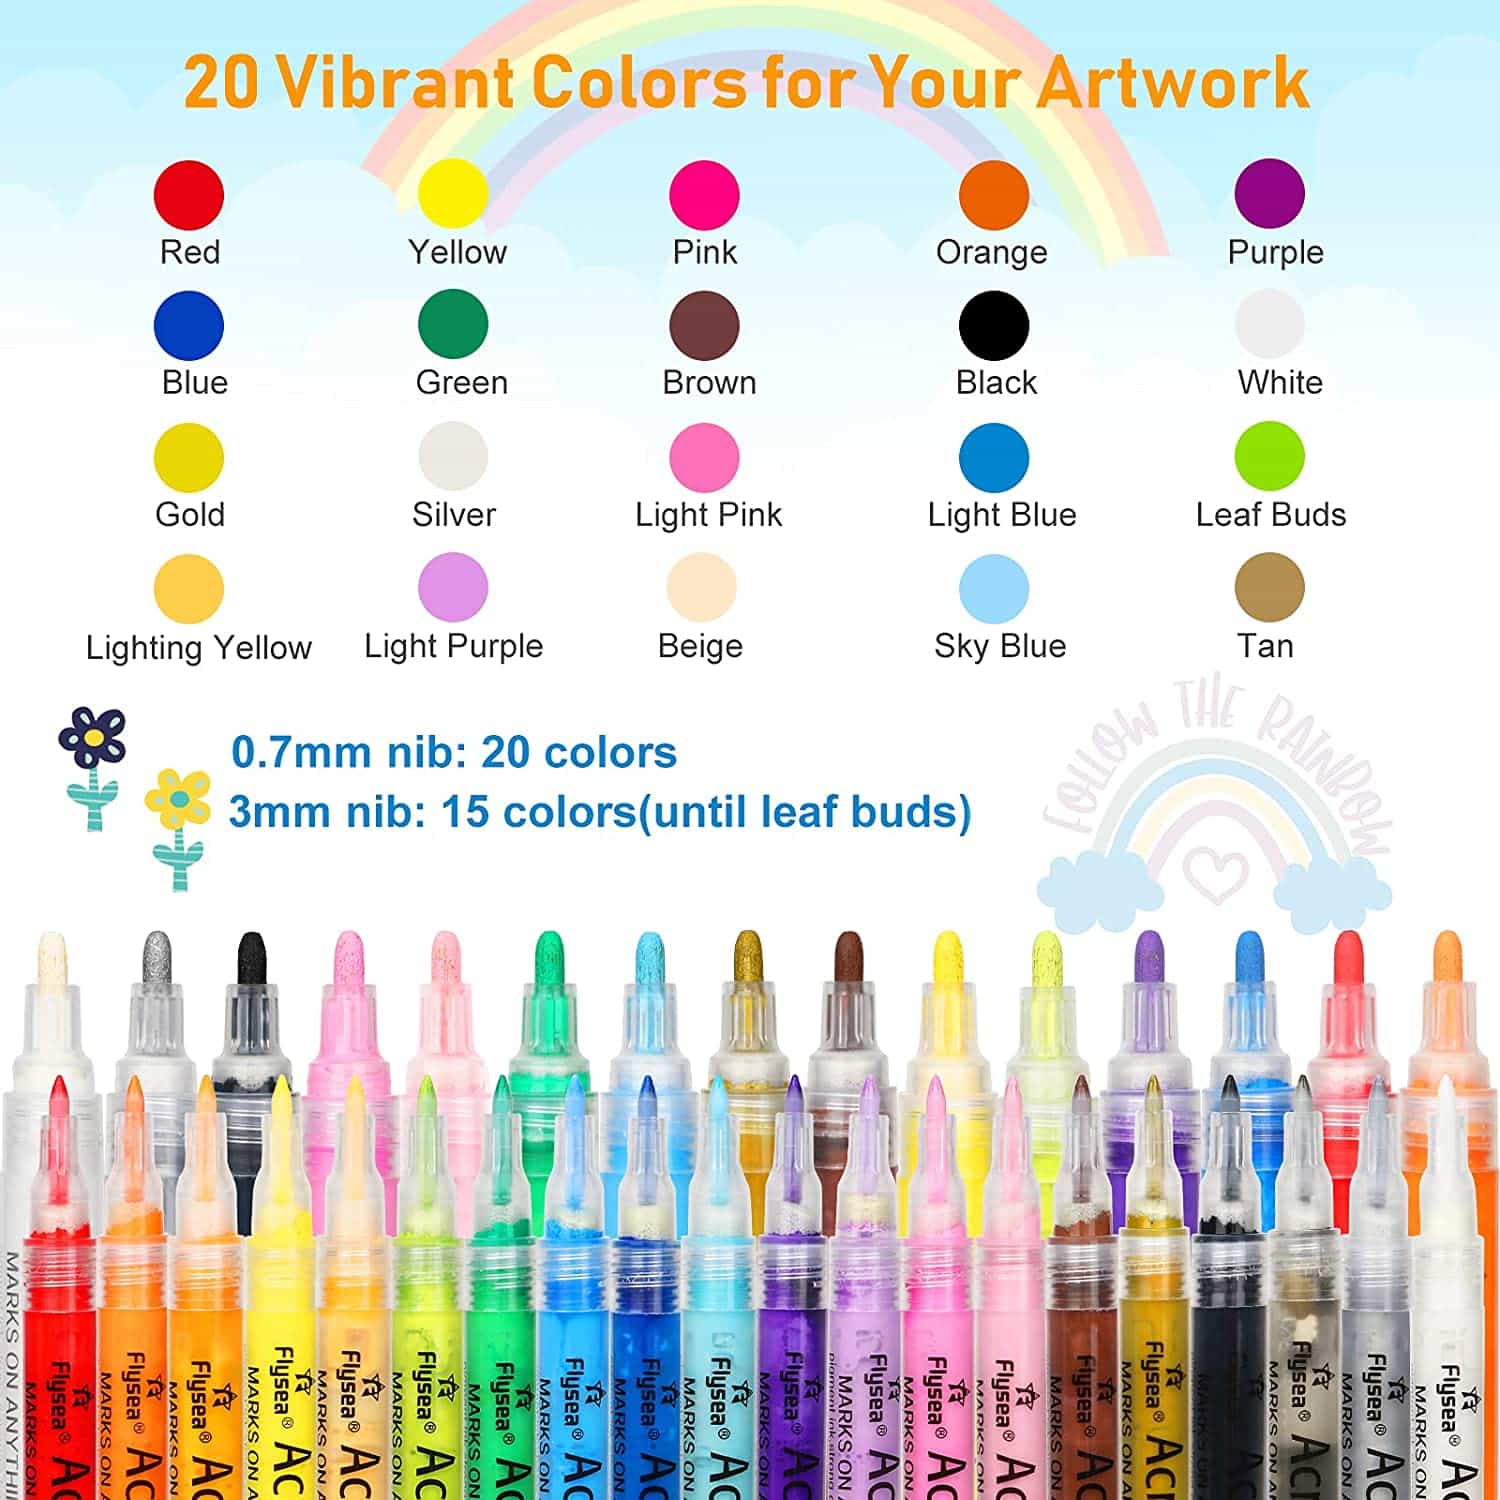 Nawod 35 Premium Acrylic Paint Marker Pens shades